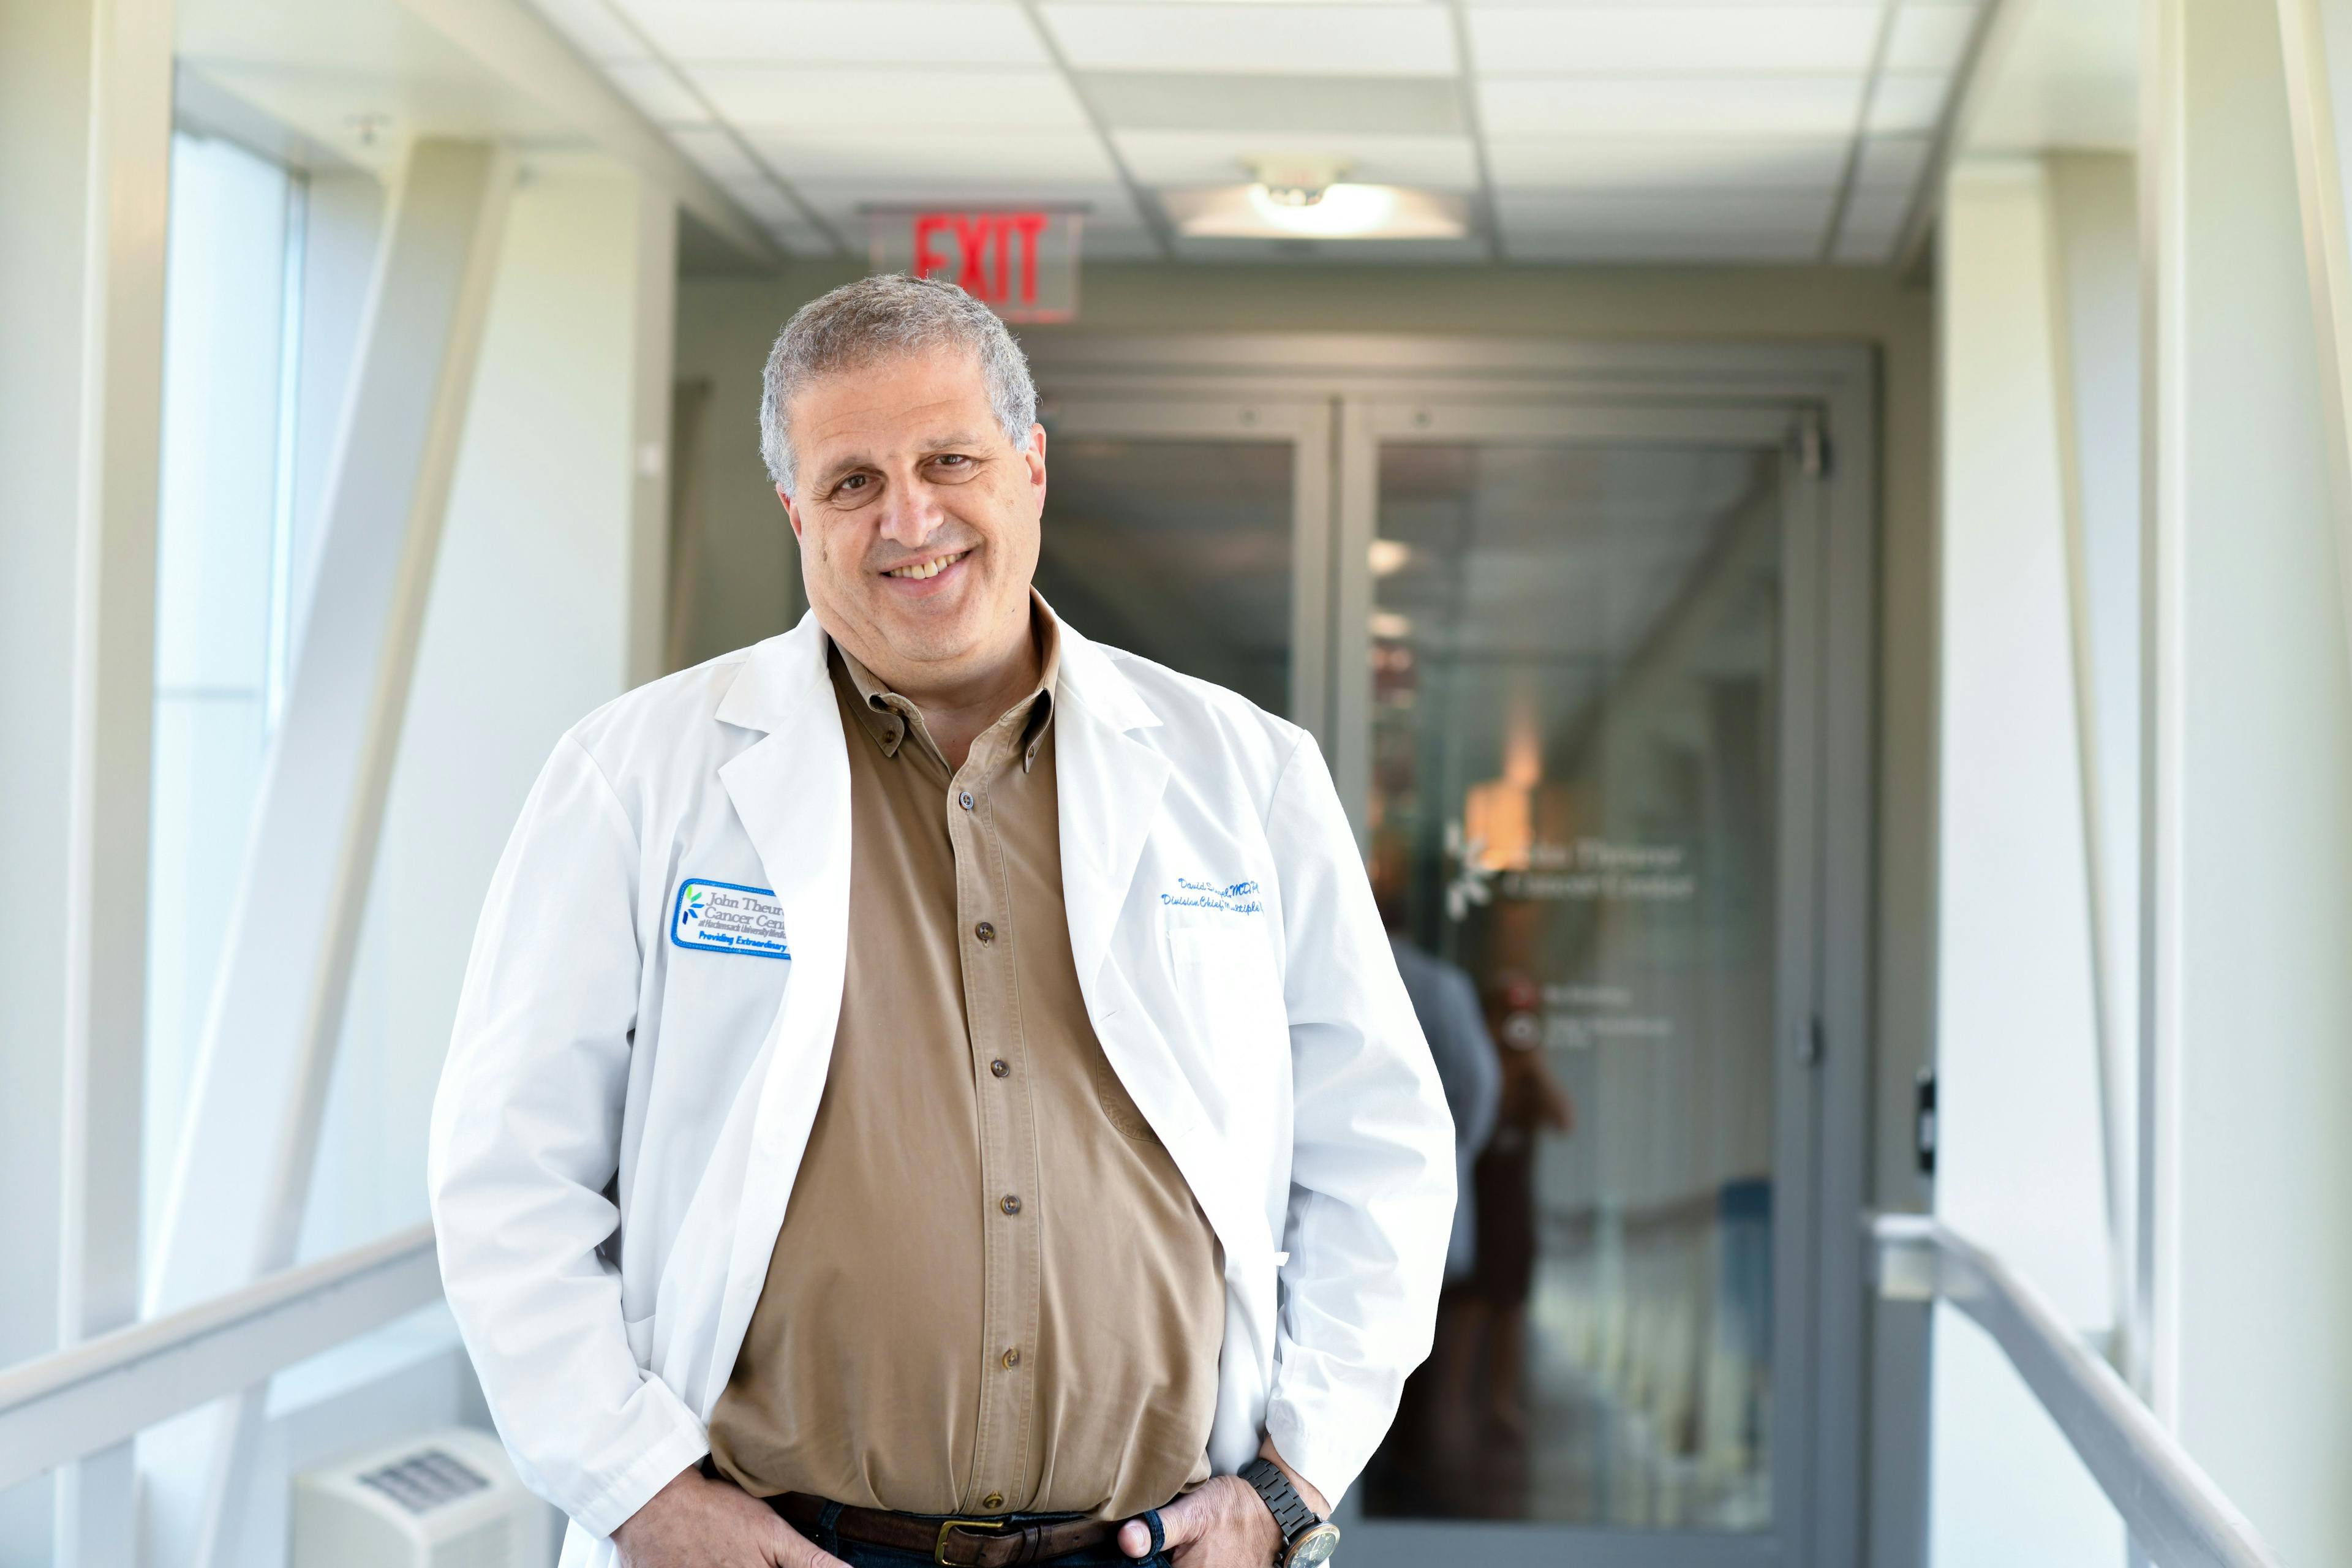 Dr. David Siegel in a white coat